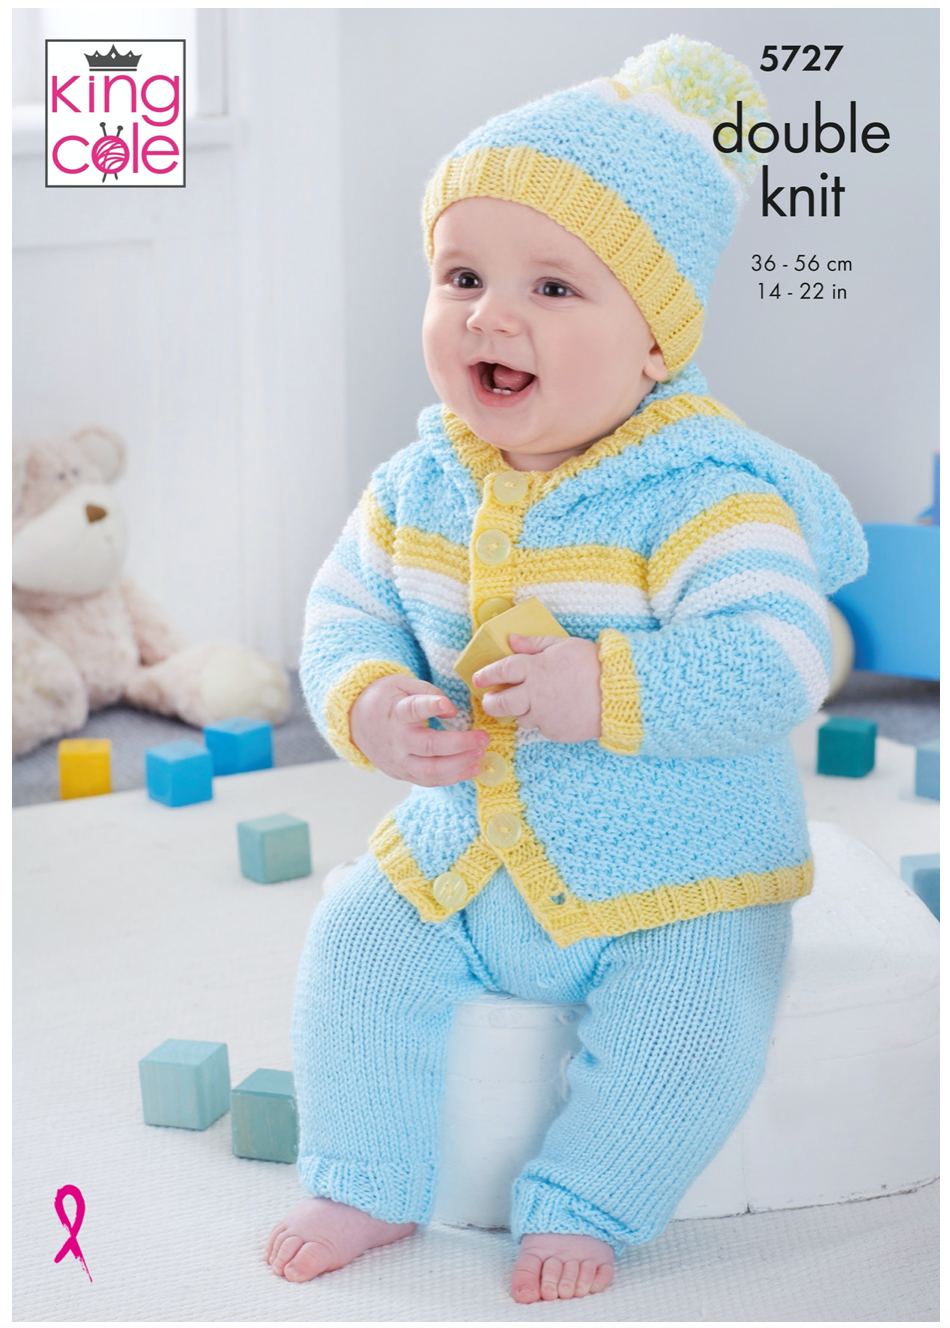 King Cole Pattern 5727 Baby Set in Cherished DK